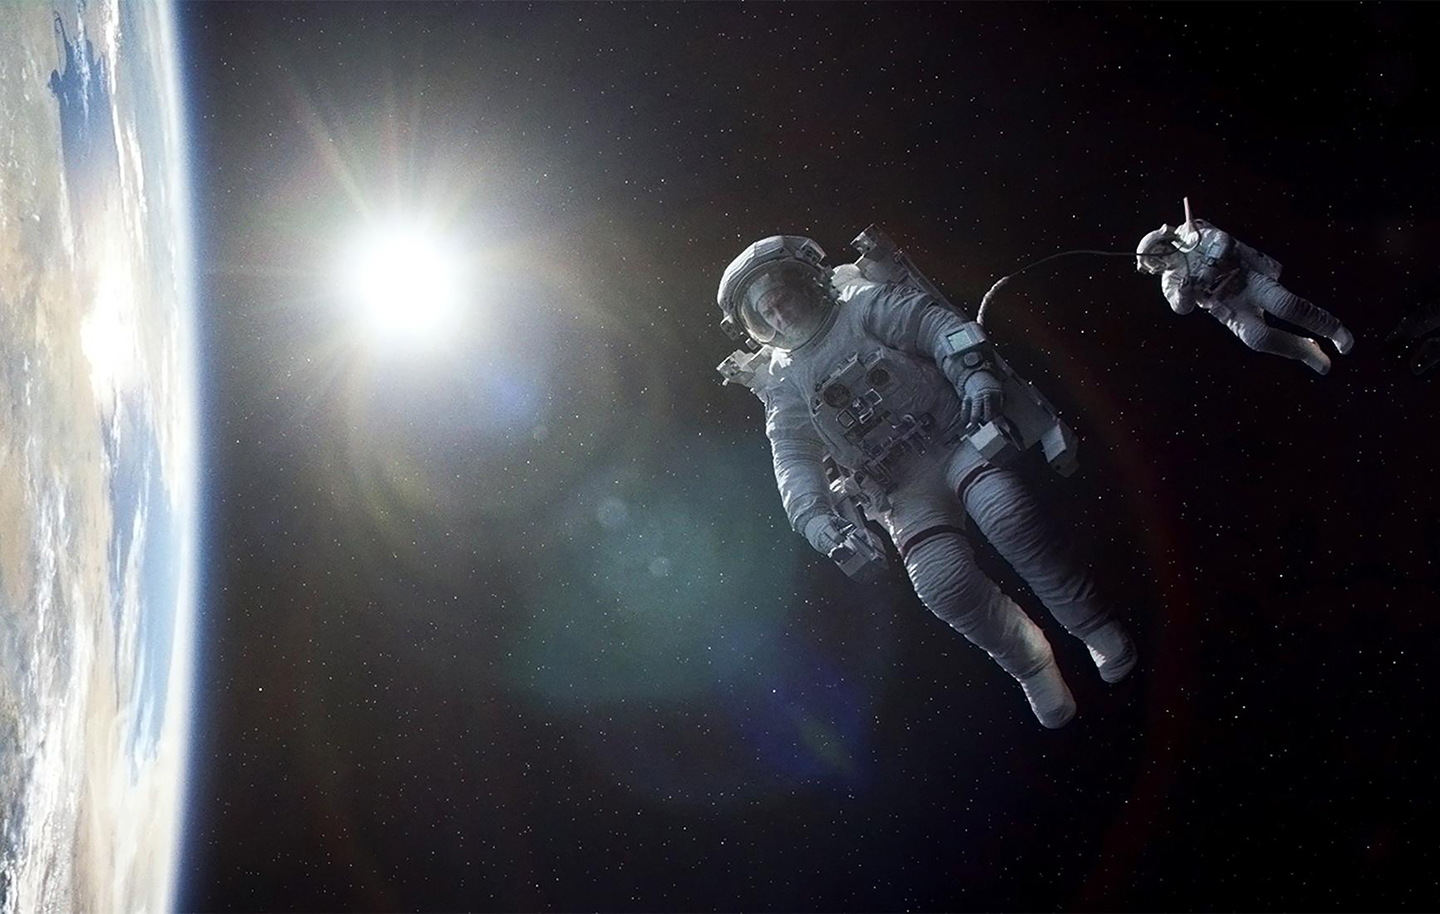 Still photo from the movie 'Gravity': Warner Bros./Esperanto Filmoj/Heyday Films